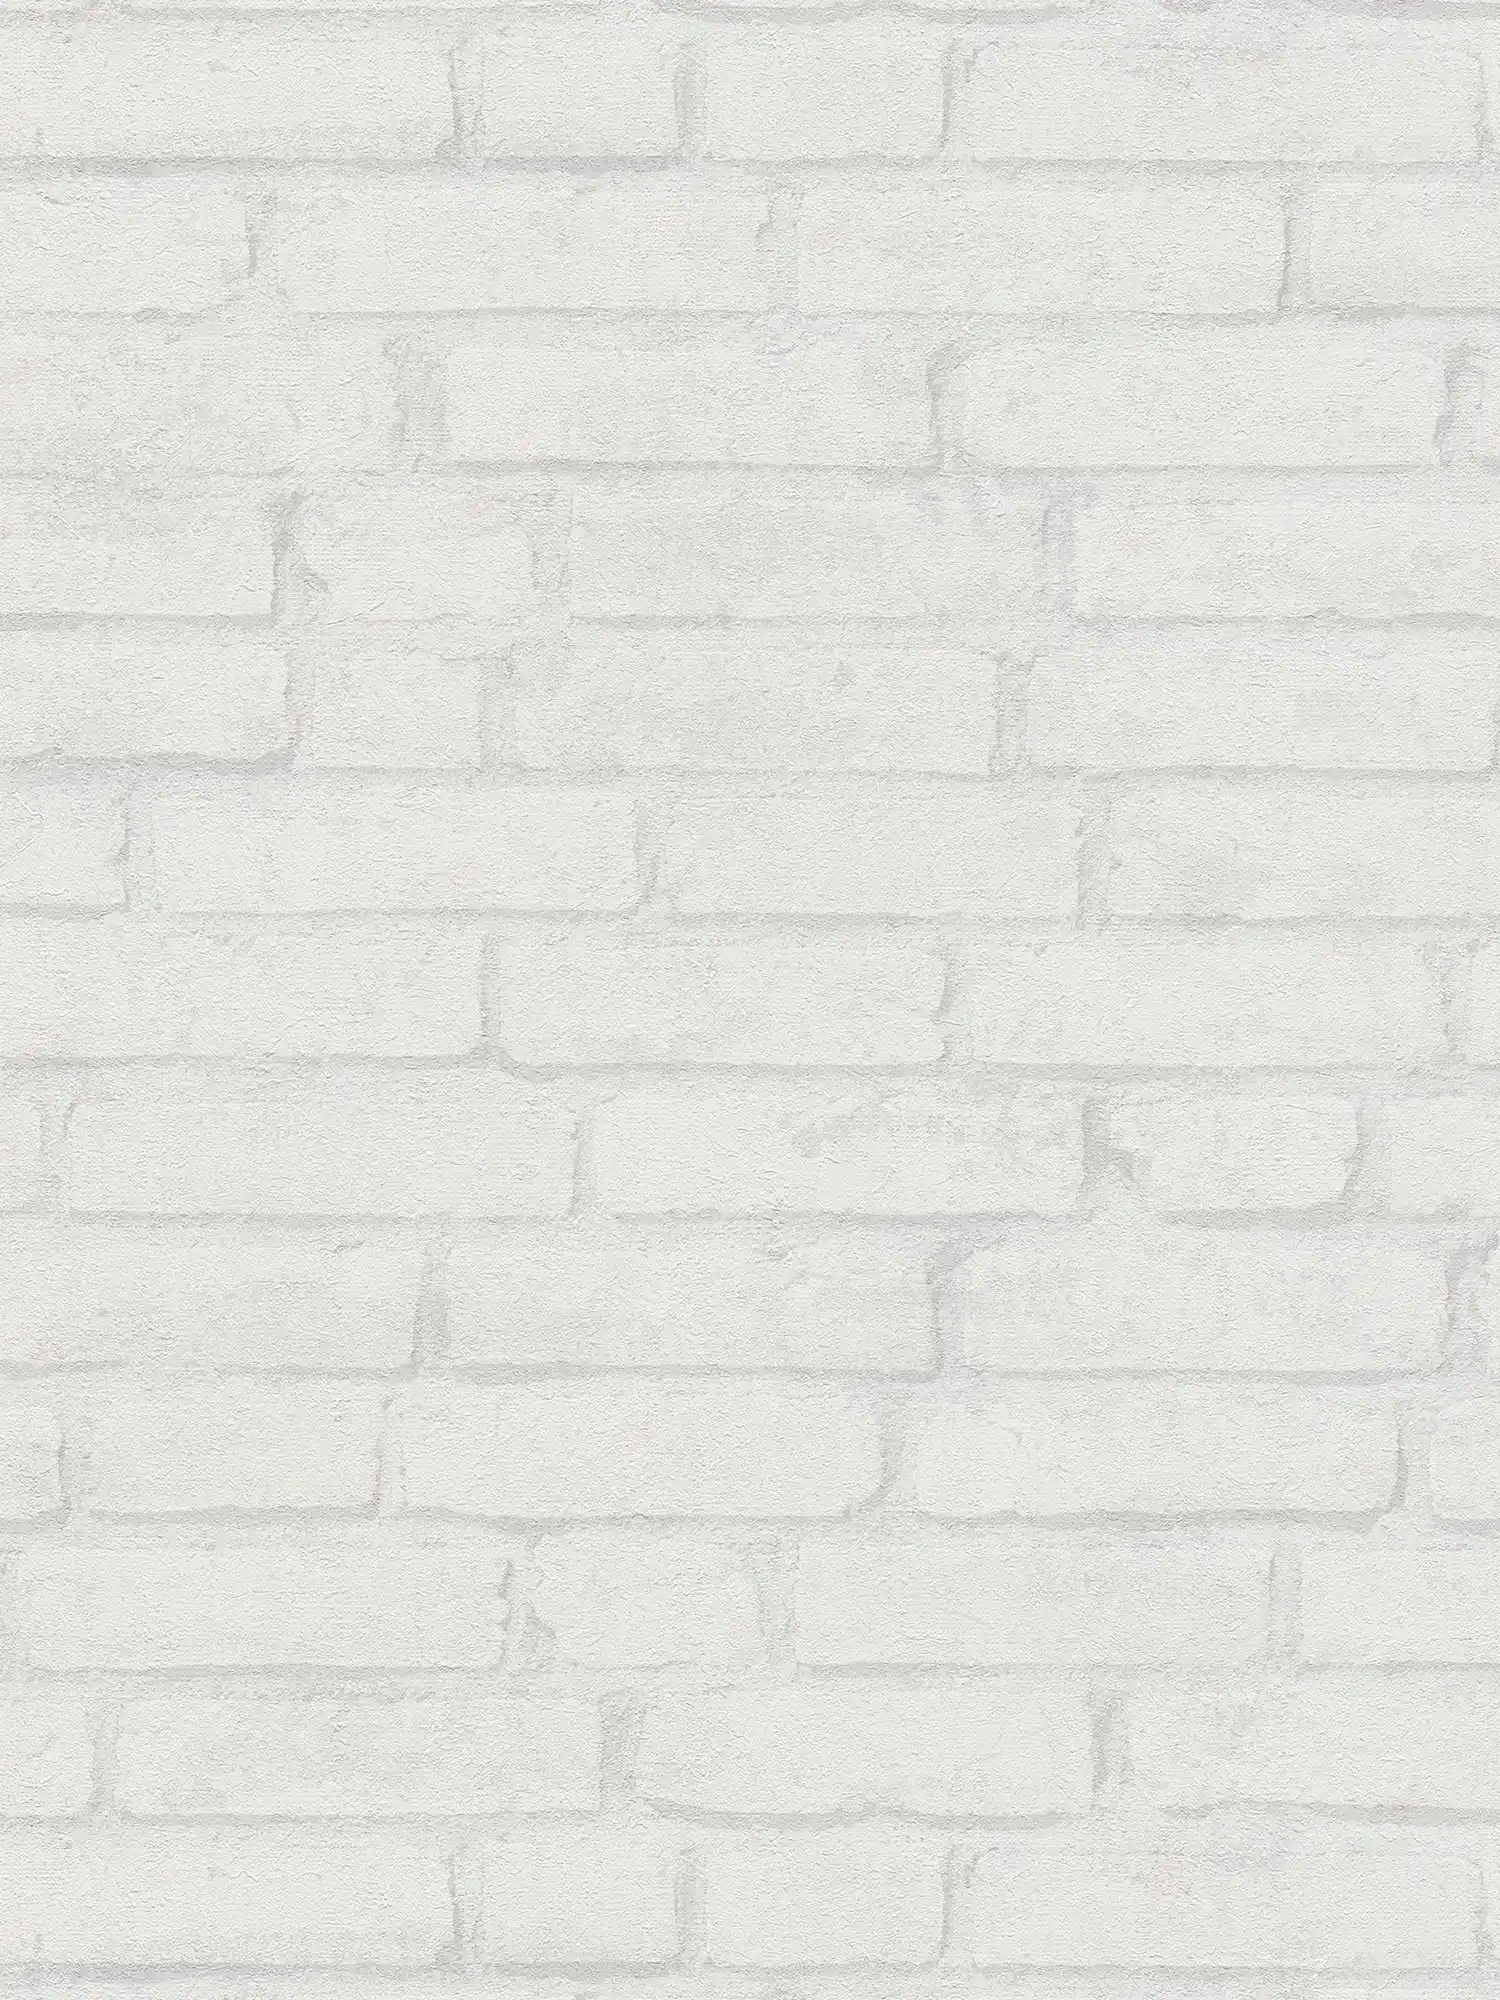 Licht steenbehang baksteenpatroon in industrieel ontwerp - wit, grijs
